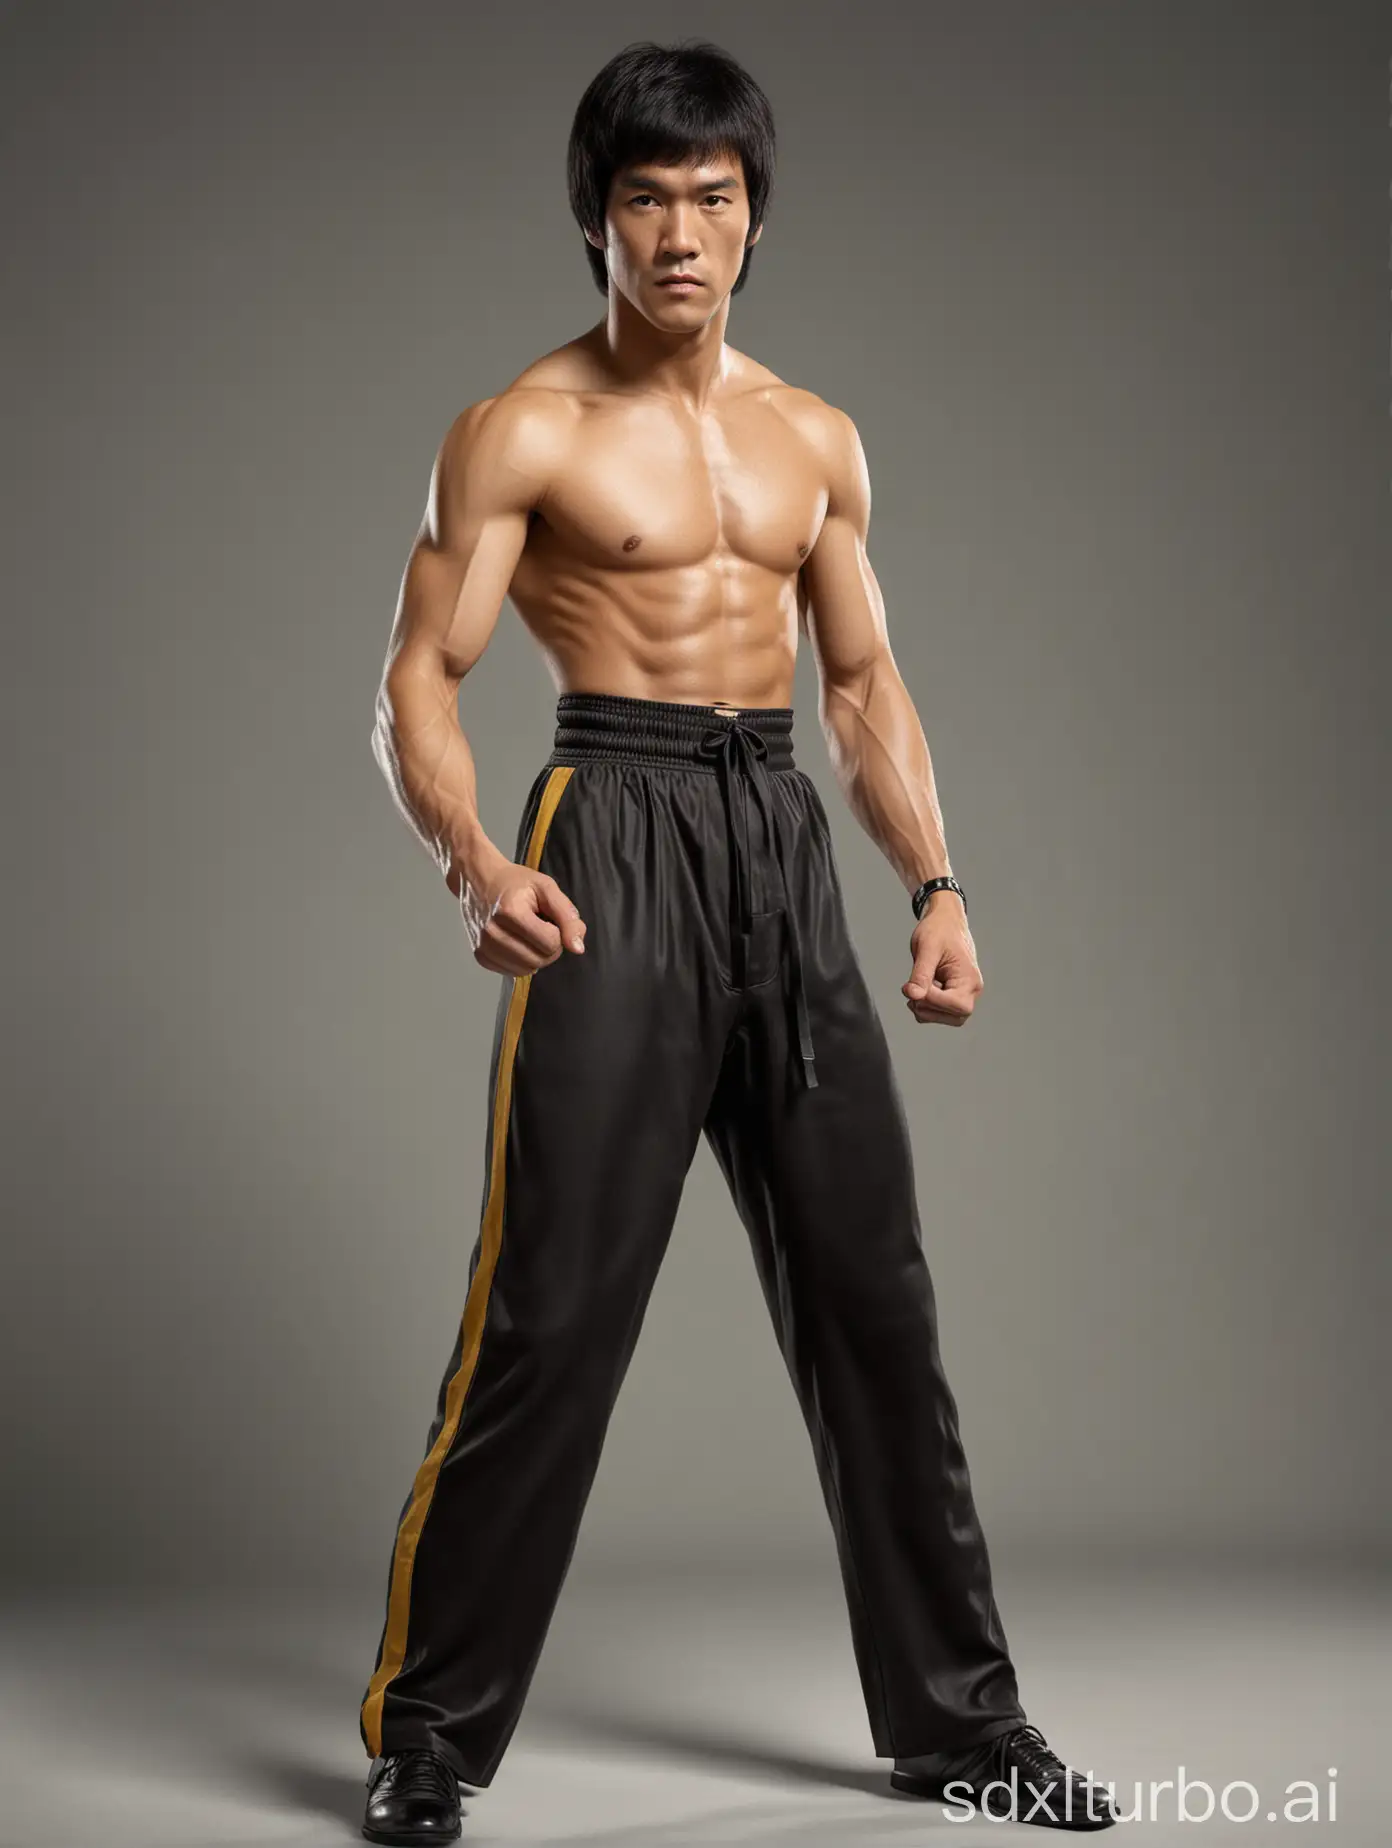 Bruce-Lee-Full-Body-Portrait-HighResolution-Realistic-Image